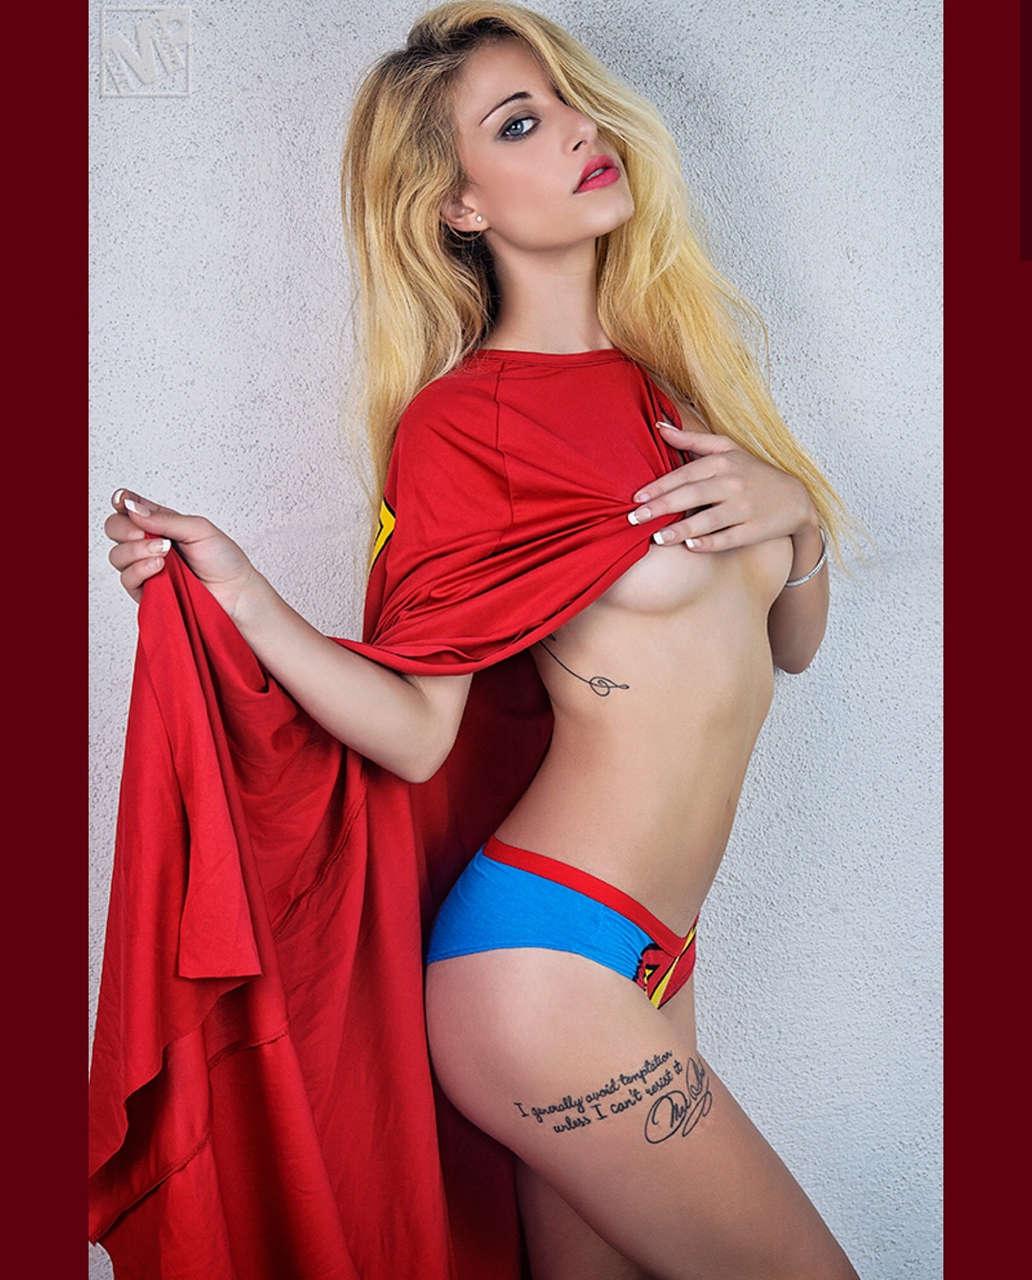 NSFW Supergirl Dbsciacc